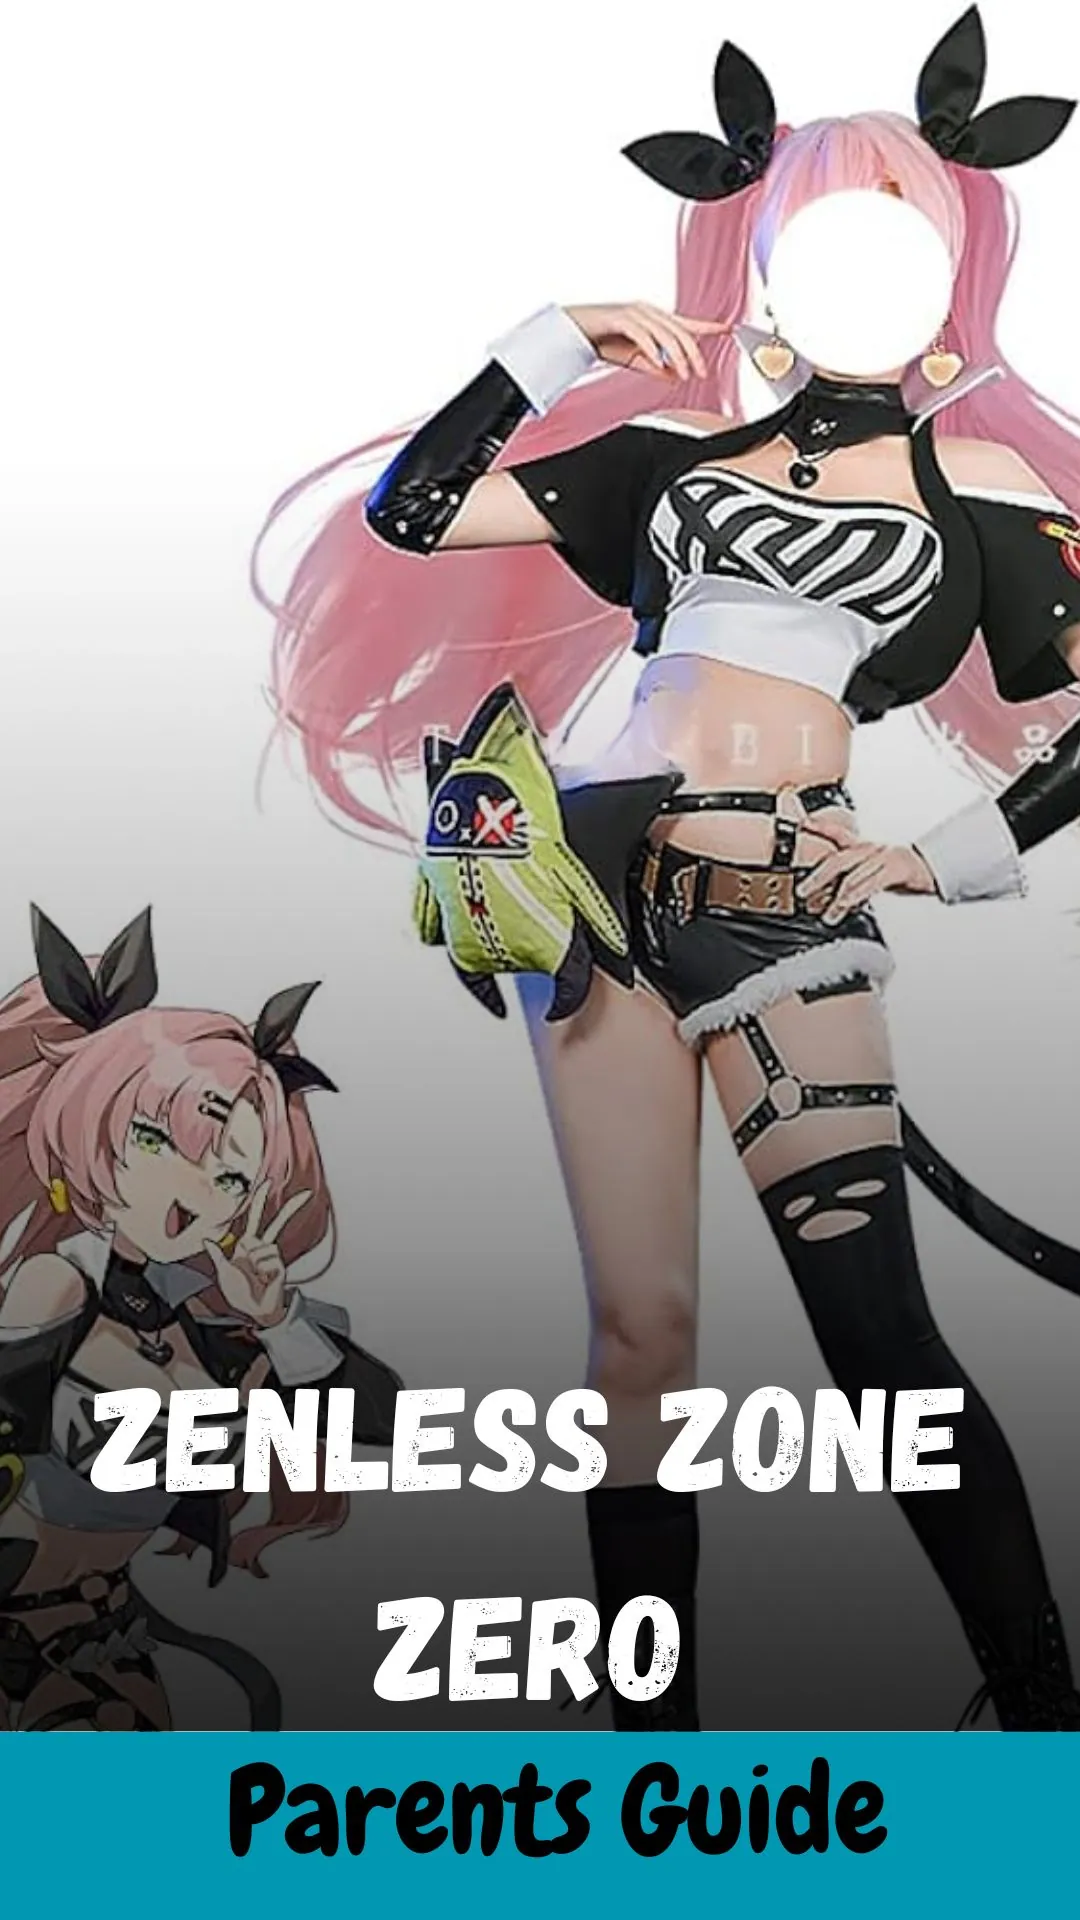 Zenless Zone Zero Parents Guide (1) (1)